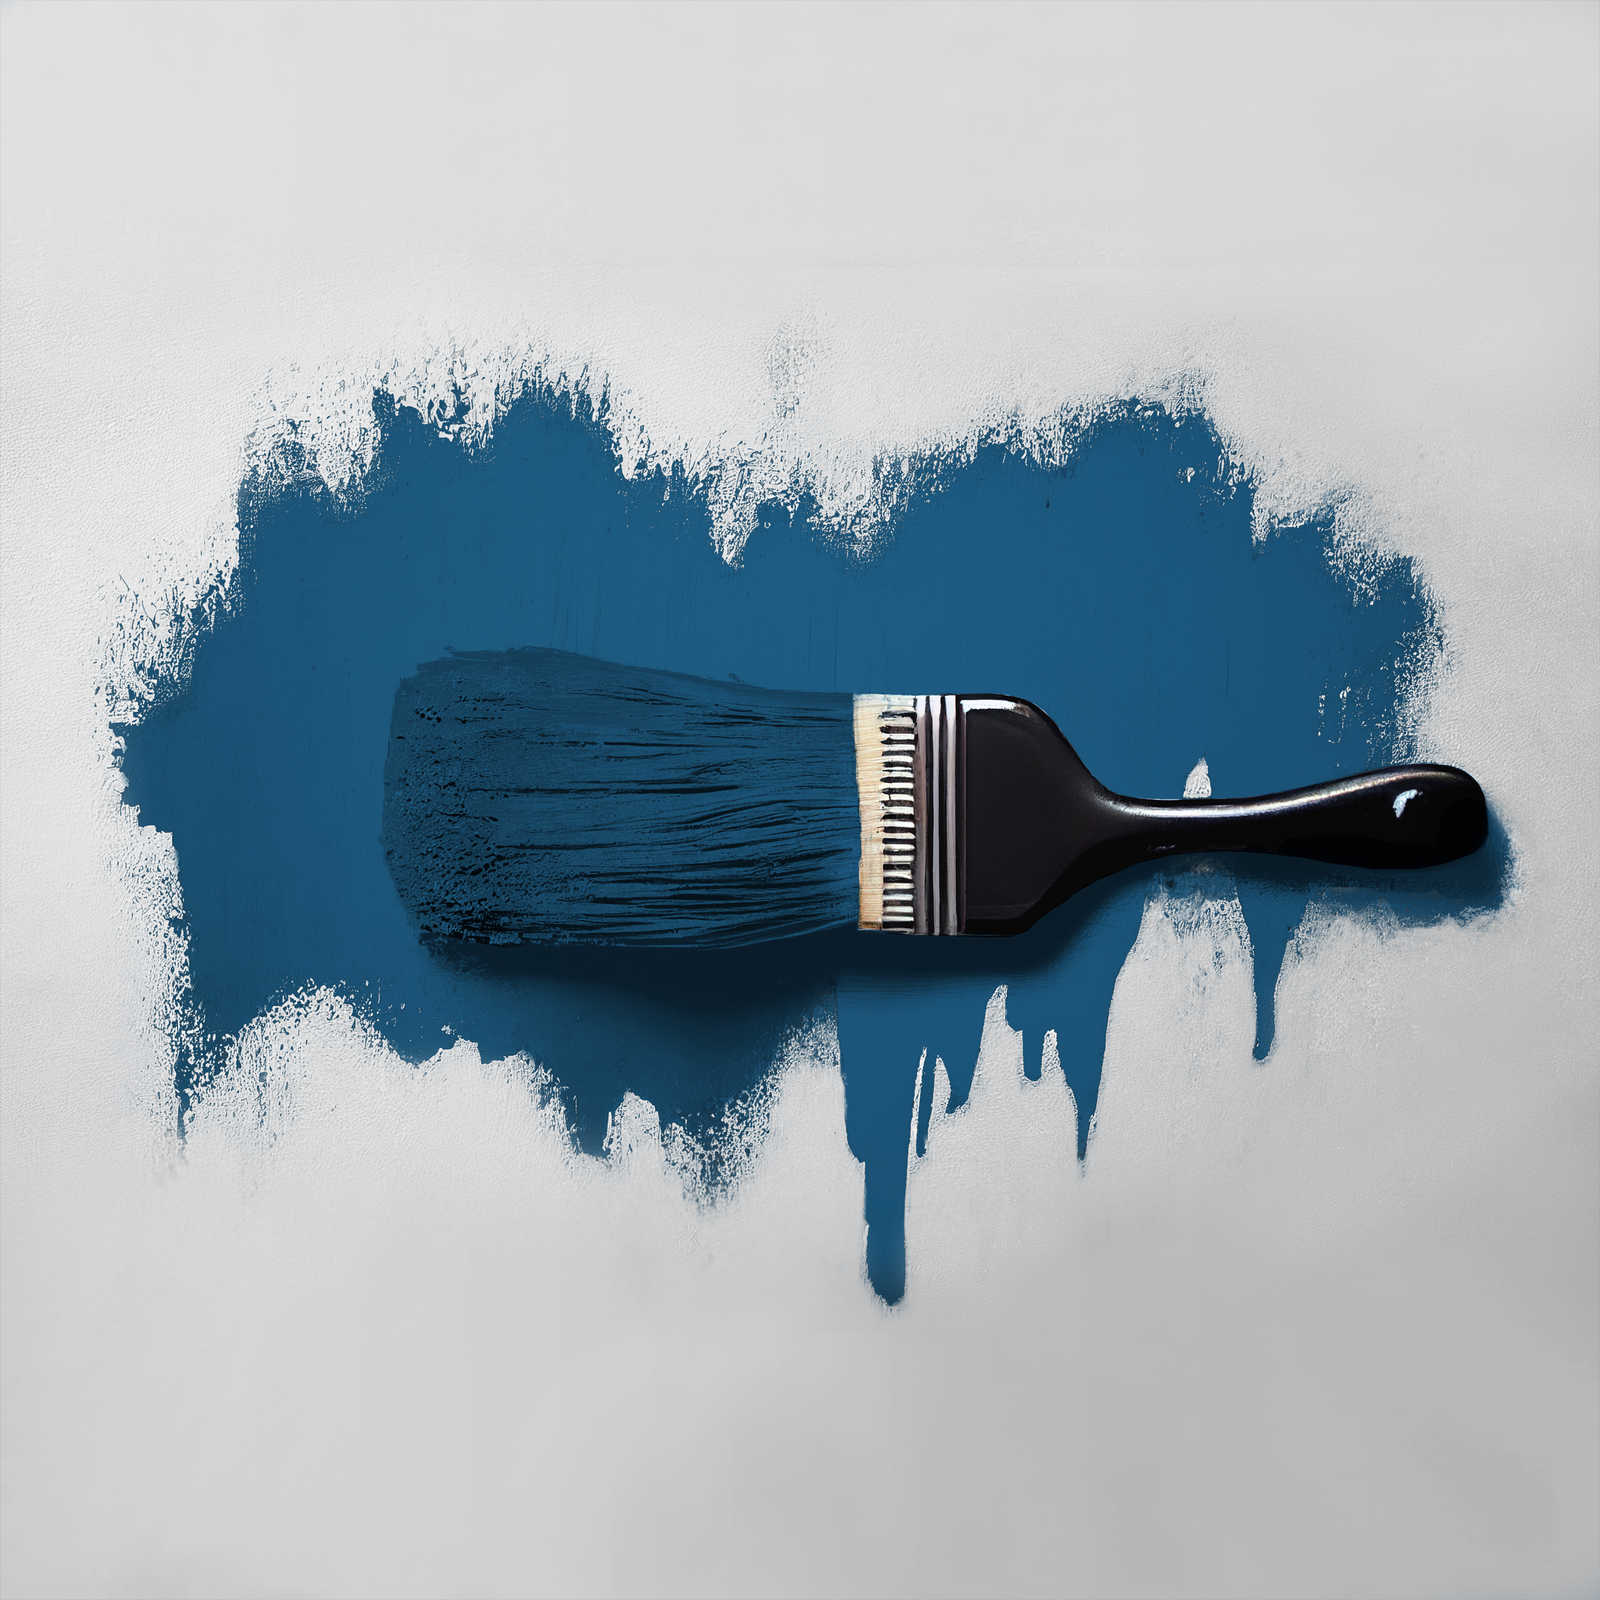             Pintura mural TCK3005 »Classic Cornflower« en azul intenso – 5,0 litro
        